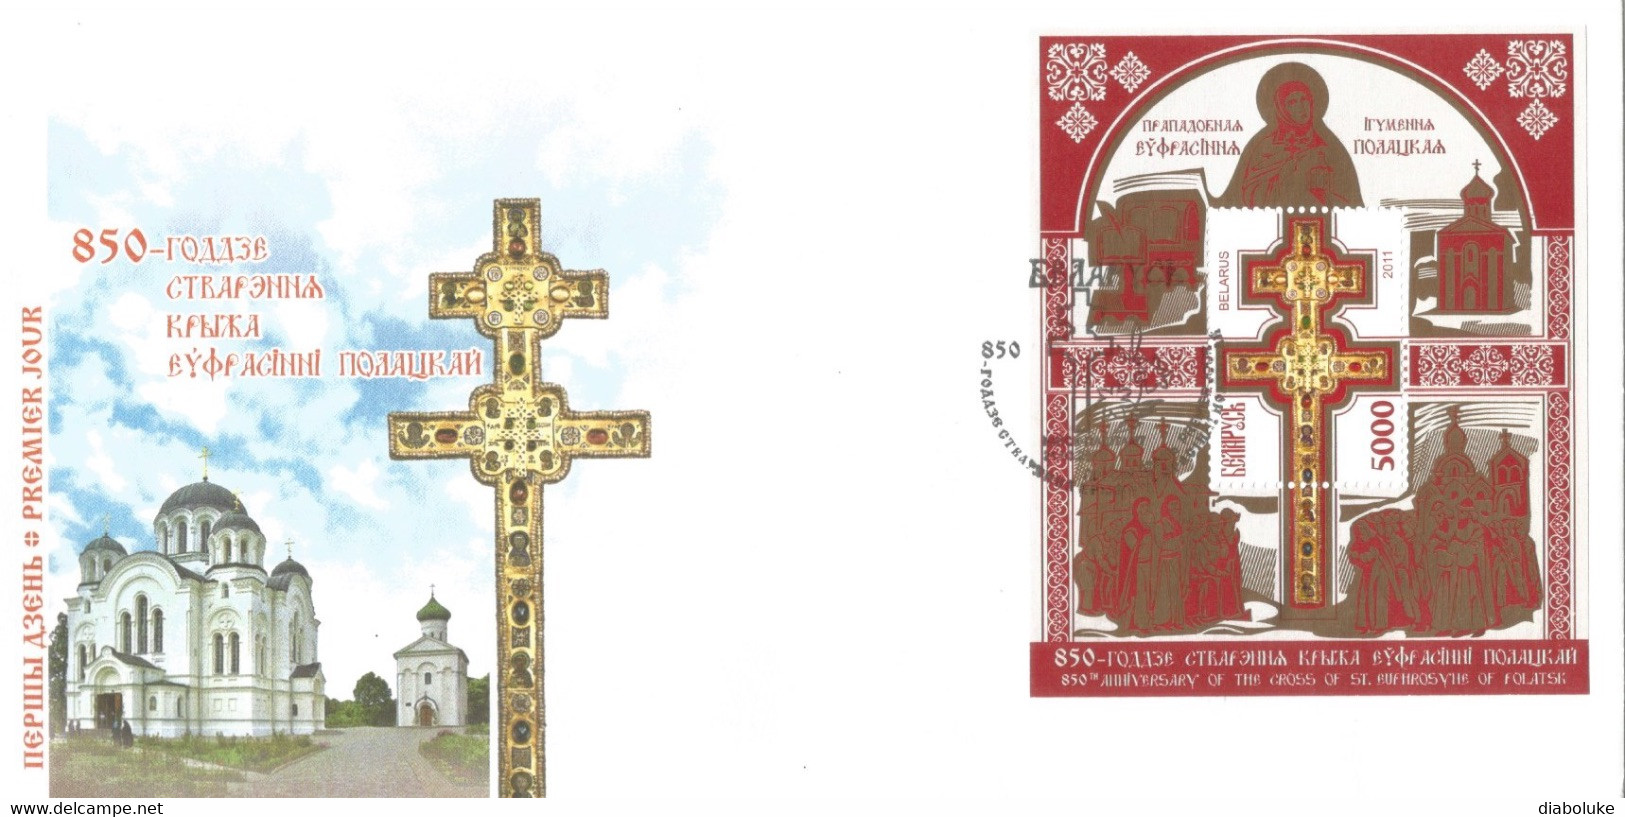 (BELARUS) 2011, FDC, MINISHEET, 850TH ANNIVERSARY OF THE CROSS OF ST. EUPHROSYNE OF POLOTSK - Bielorussia